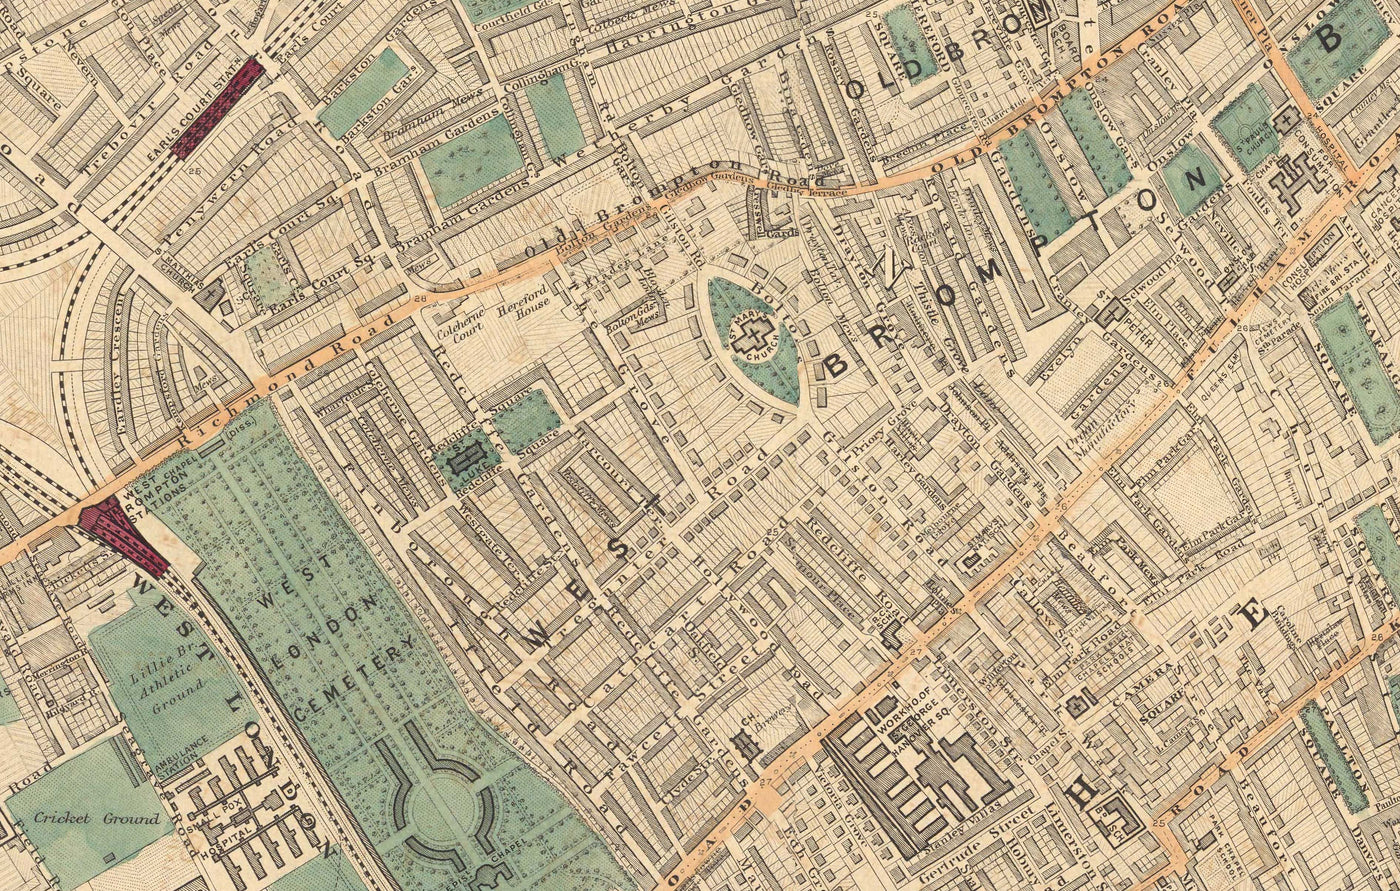 Old Colour Map of West London, 1891- Fulham, Brompton, Battersea, Hammersmith - SW6, SW10, SW15, SW18, SW10, SW11, SW5, W6 W14